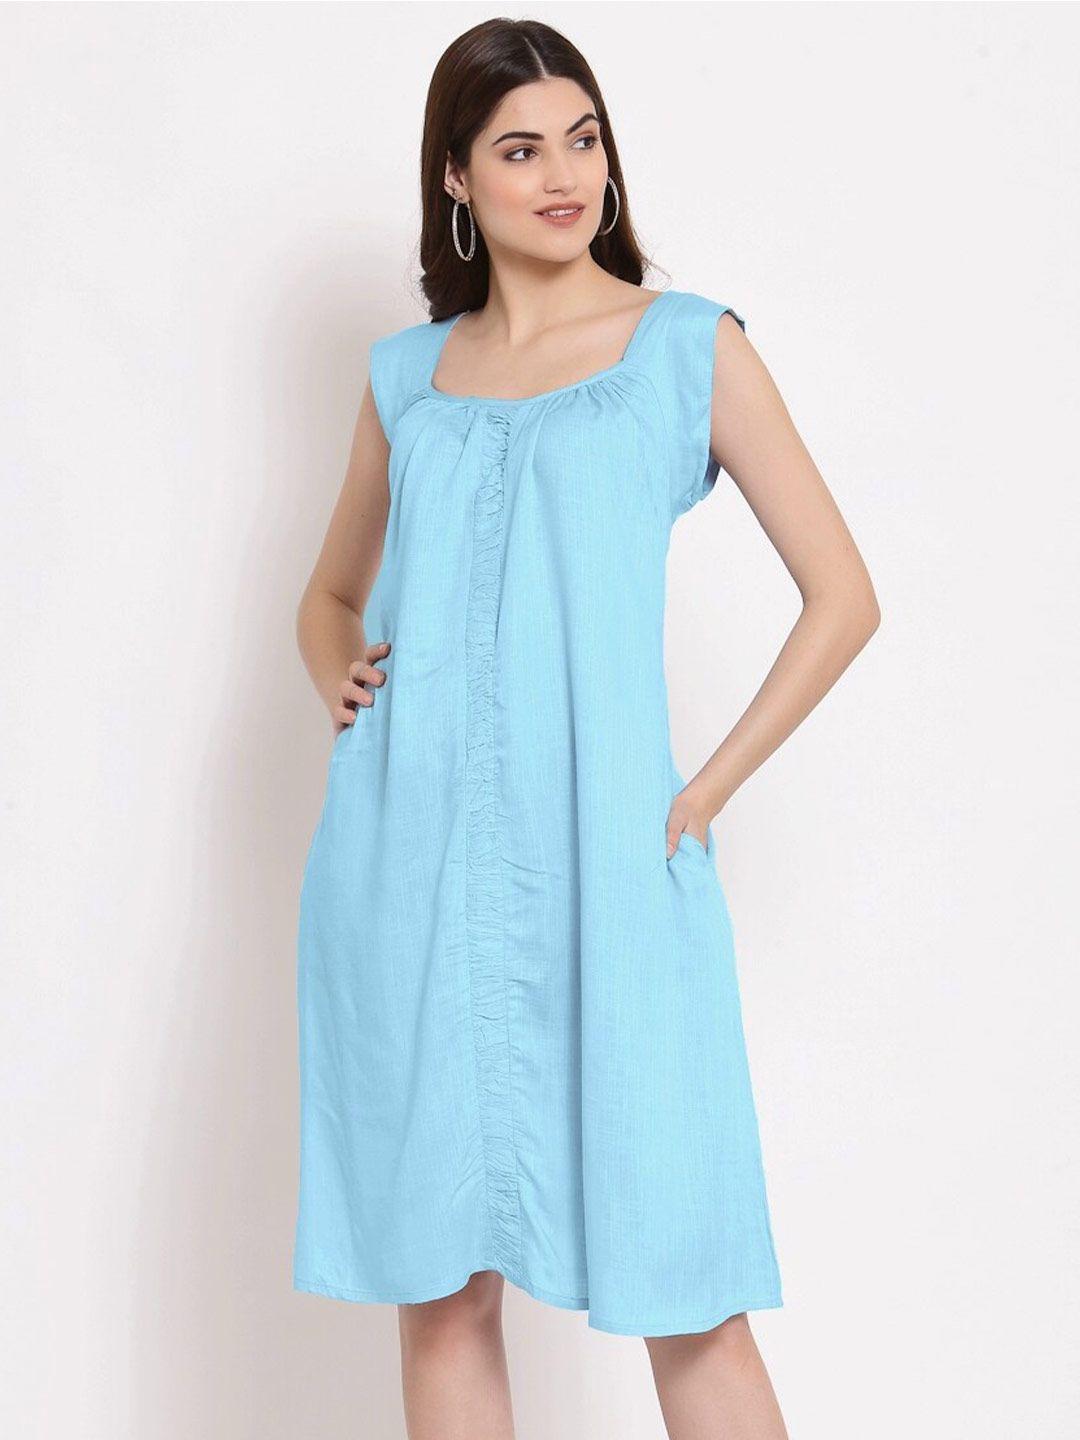 patrorna cotton sleeveless a-line dress